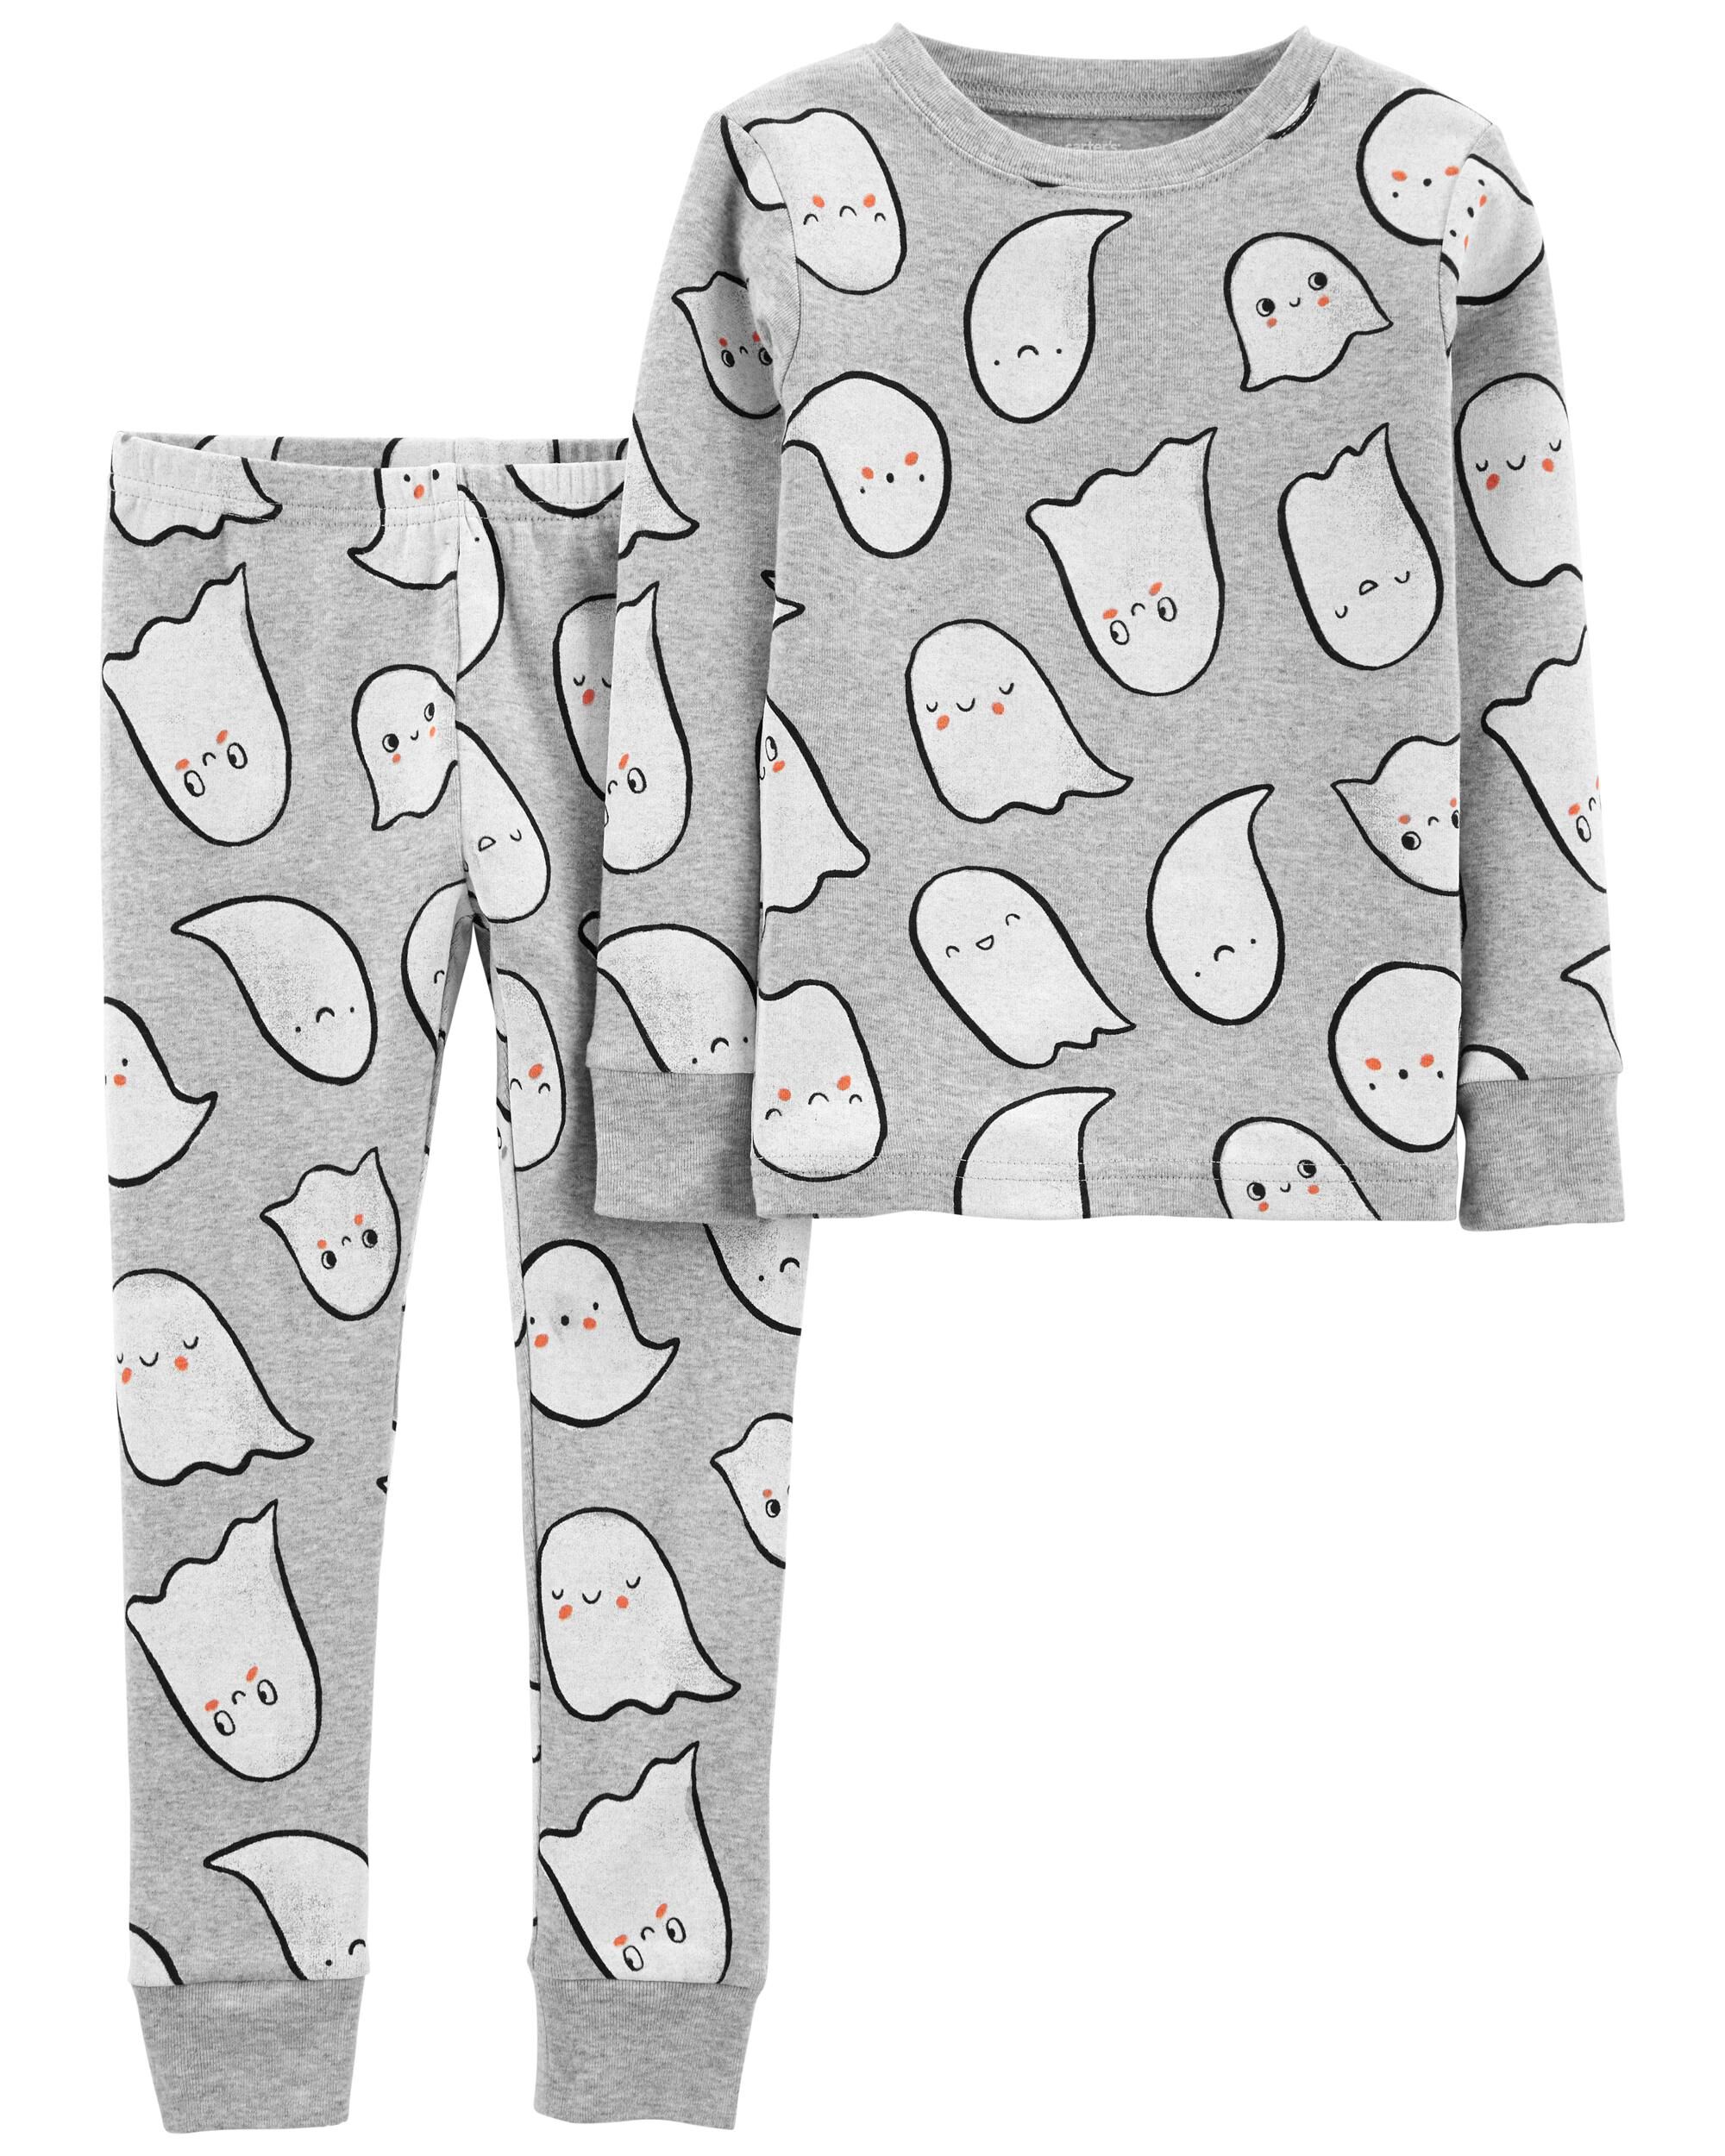 2-Piece Halloween Ghost 100% Snug Fit Cotton PJs 